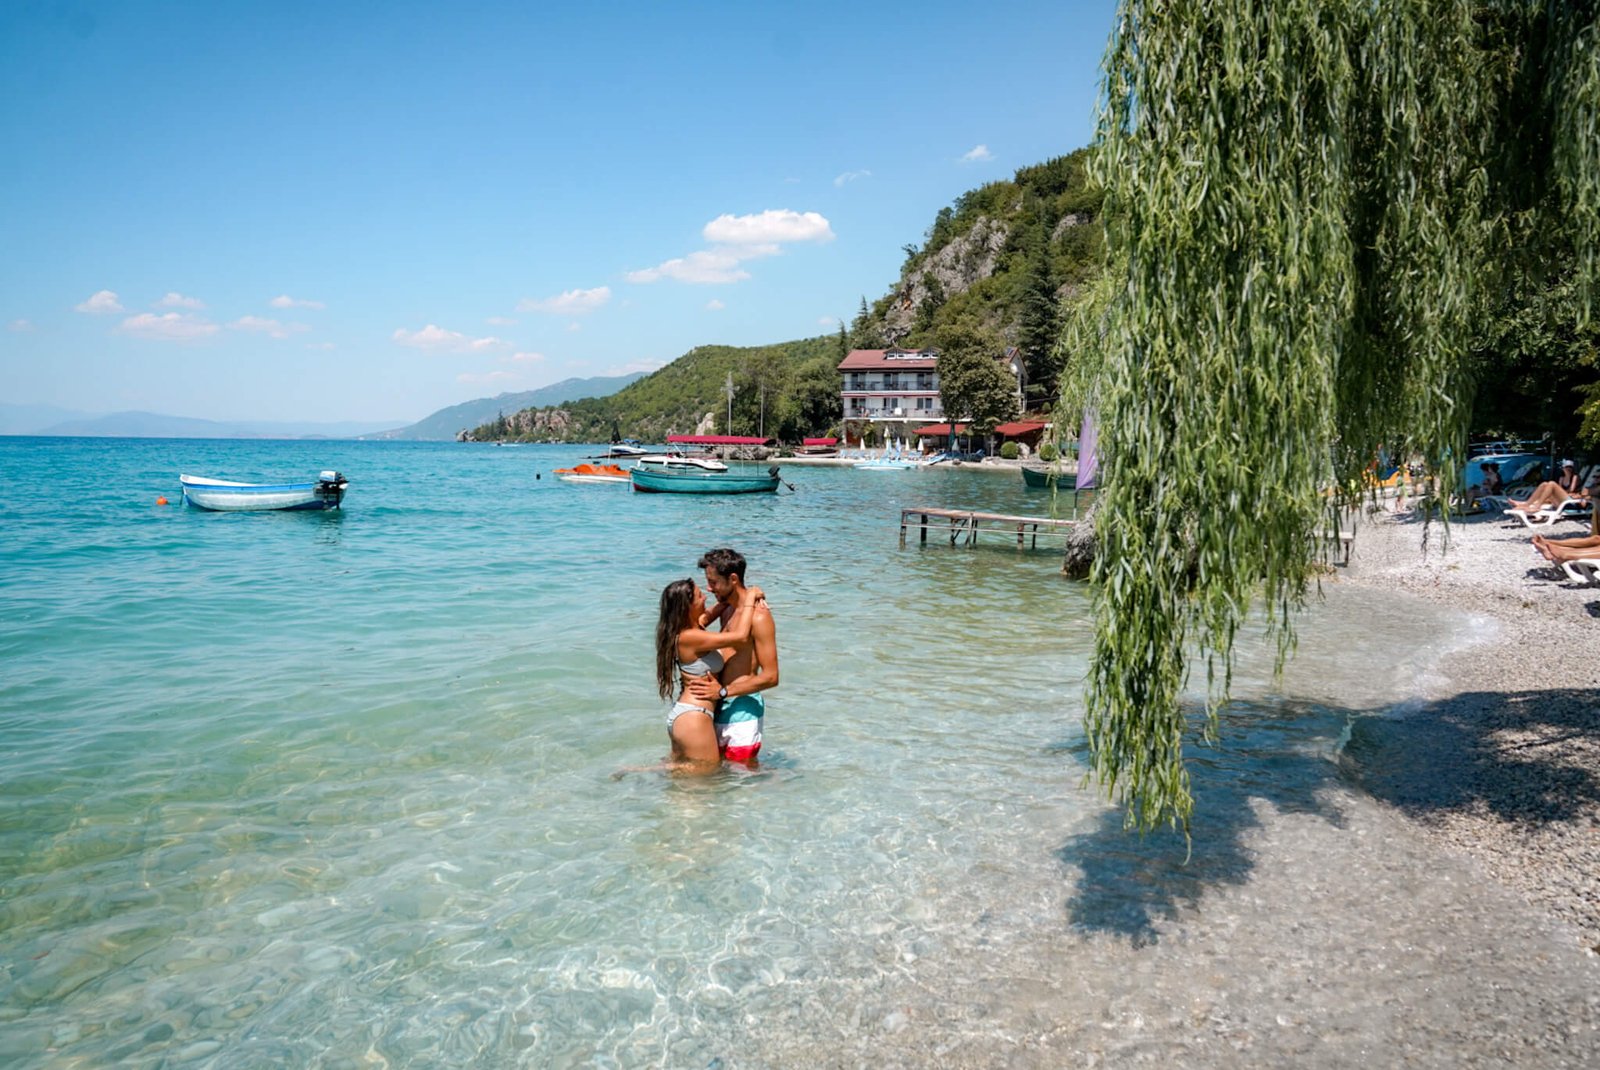 Lake Ohrid, What Countries Were the Balkans